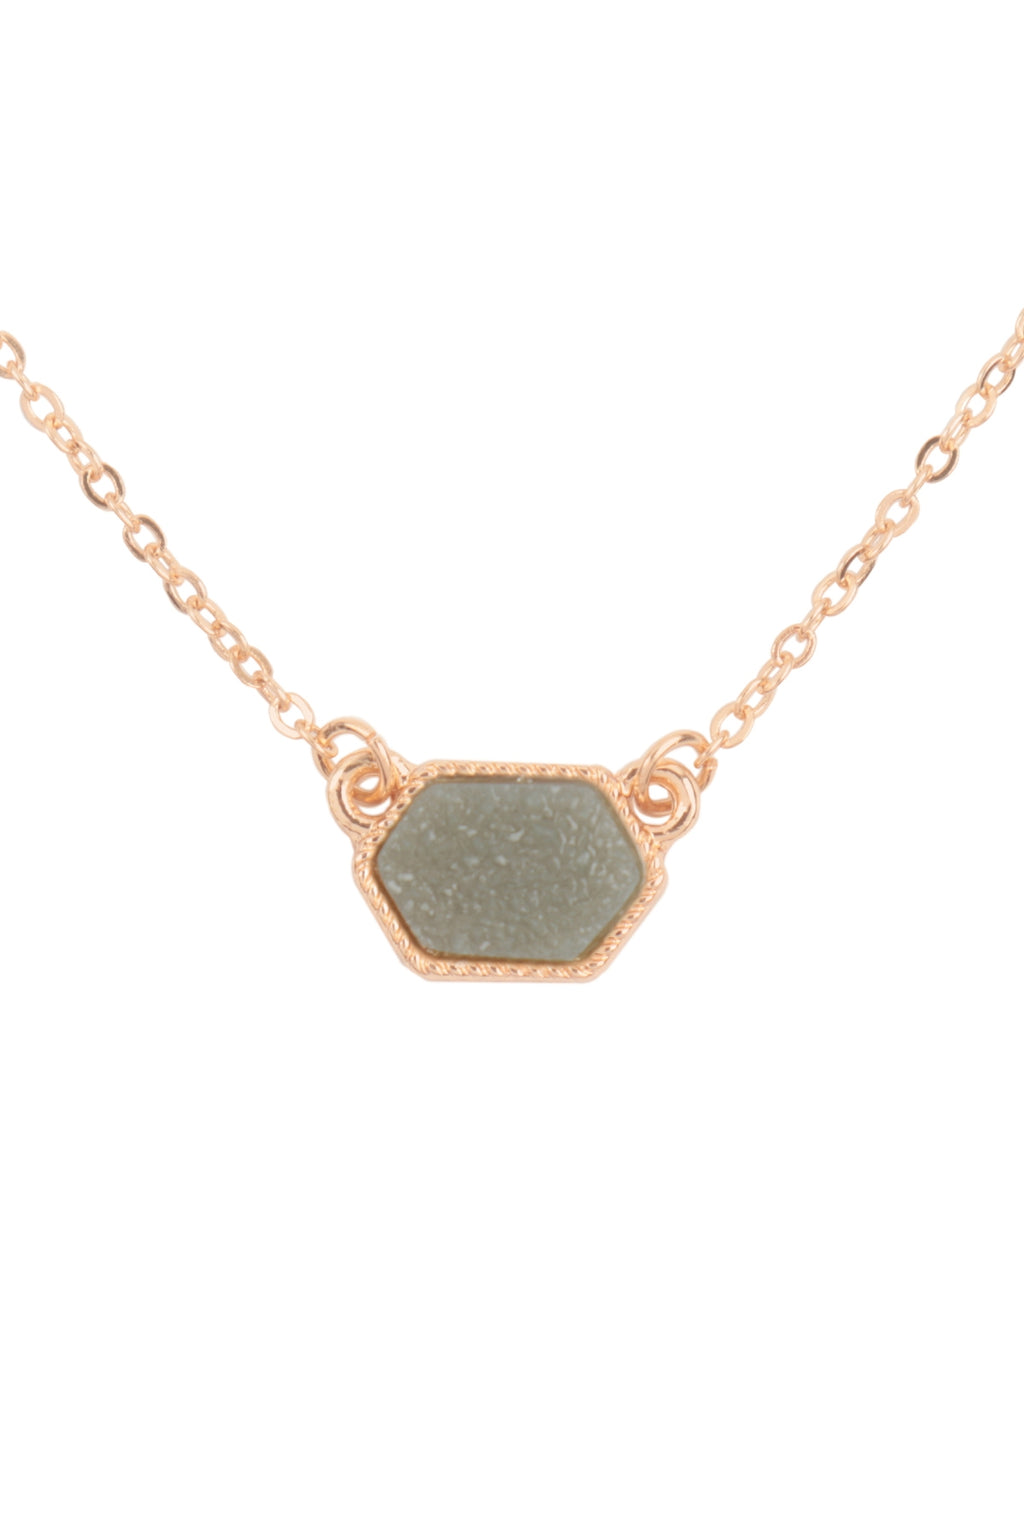 Druzy Hexagon Pendant Necklace Earring Set Dark Gray - Pack of 6